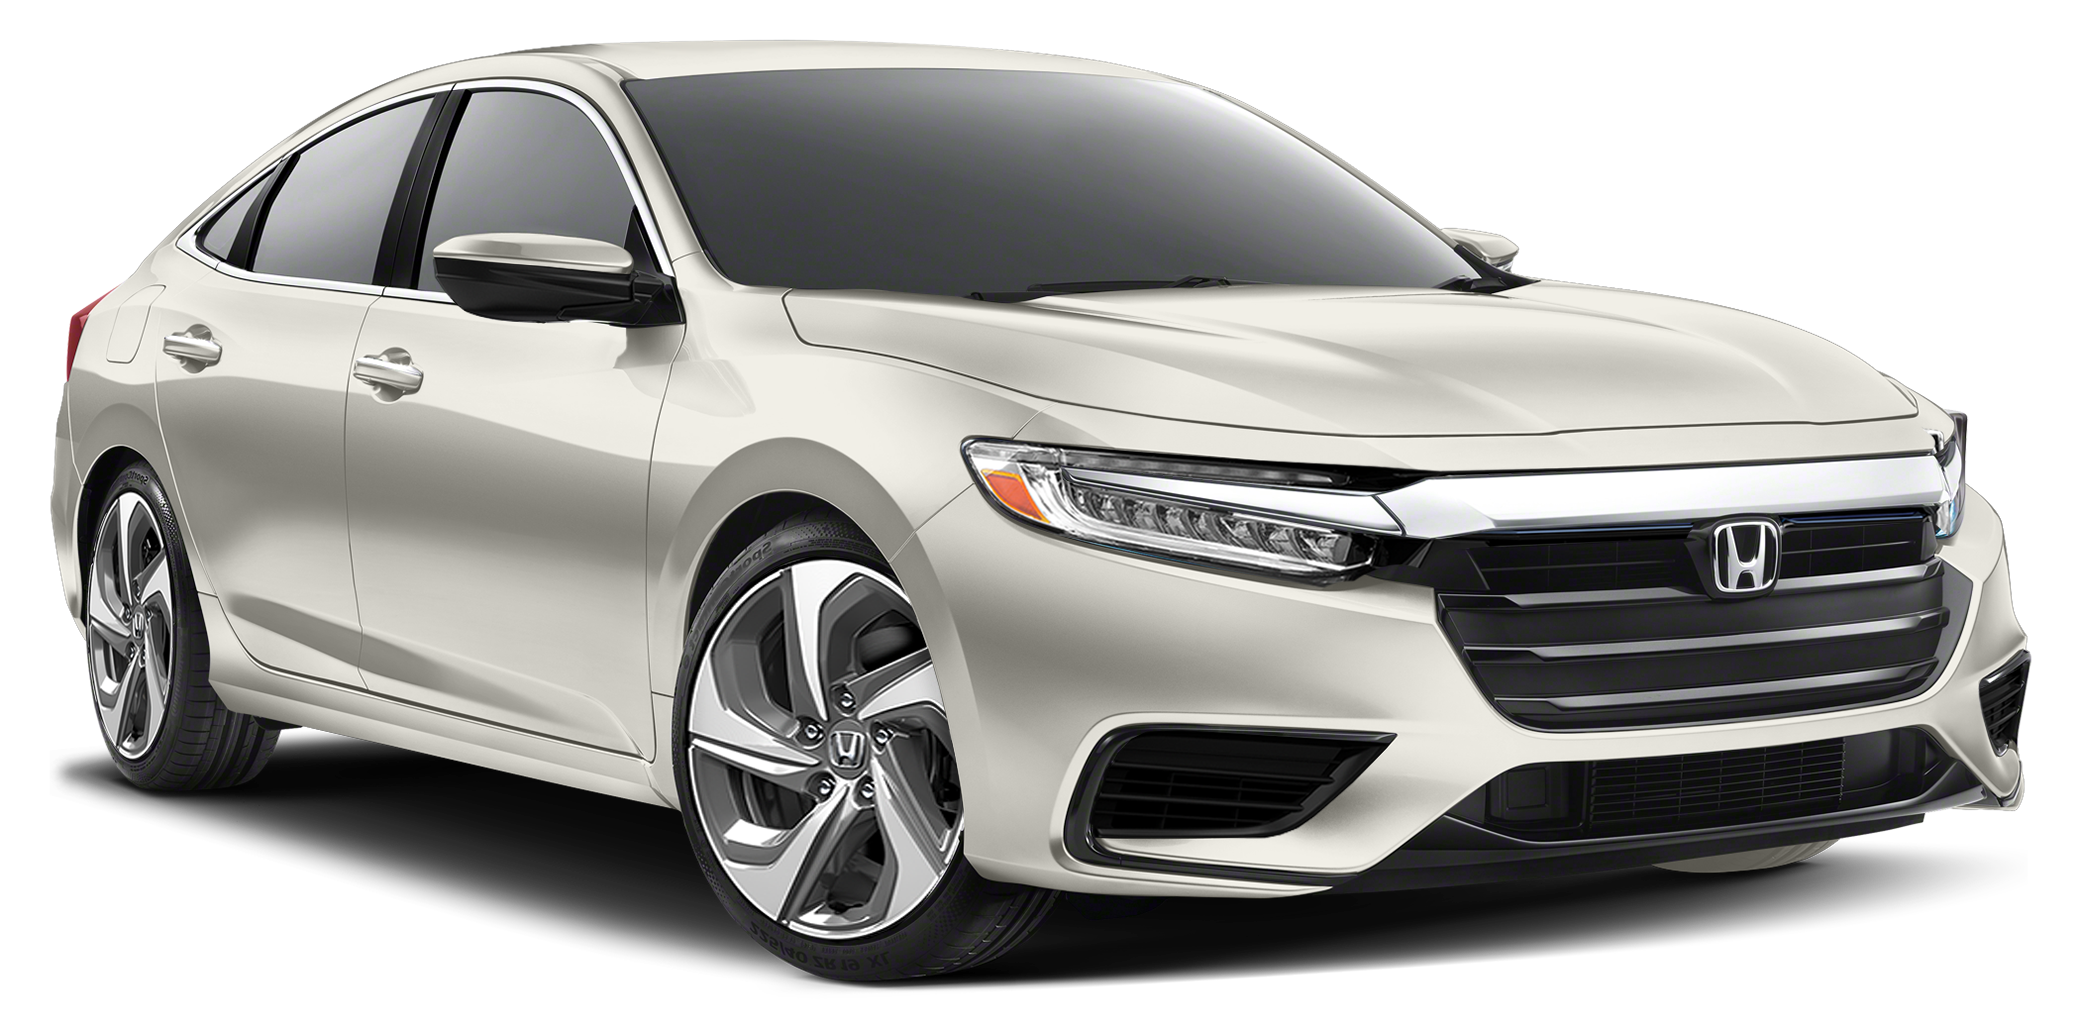 http://images.dealer.com/ddc/vehicles/2020/Honda/Insight/Sedan/trim_LX_5081c8/perspective/front-right/2019_56.png